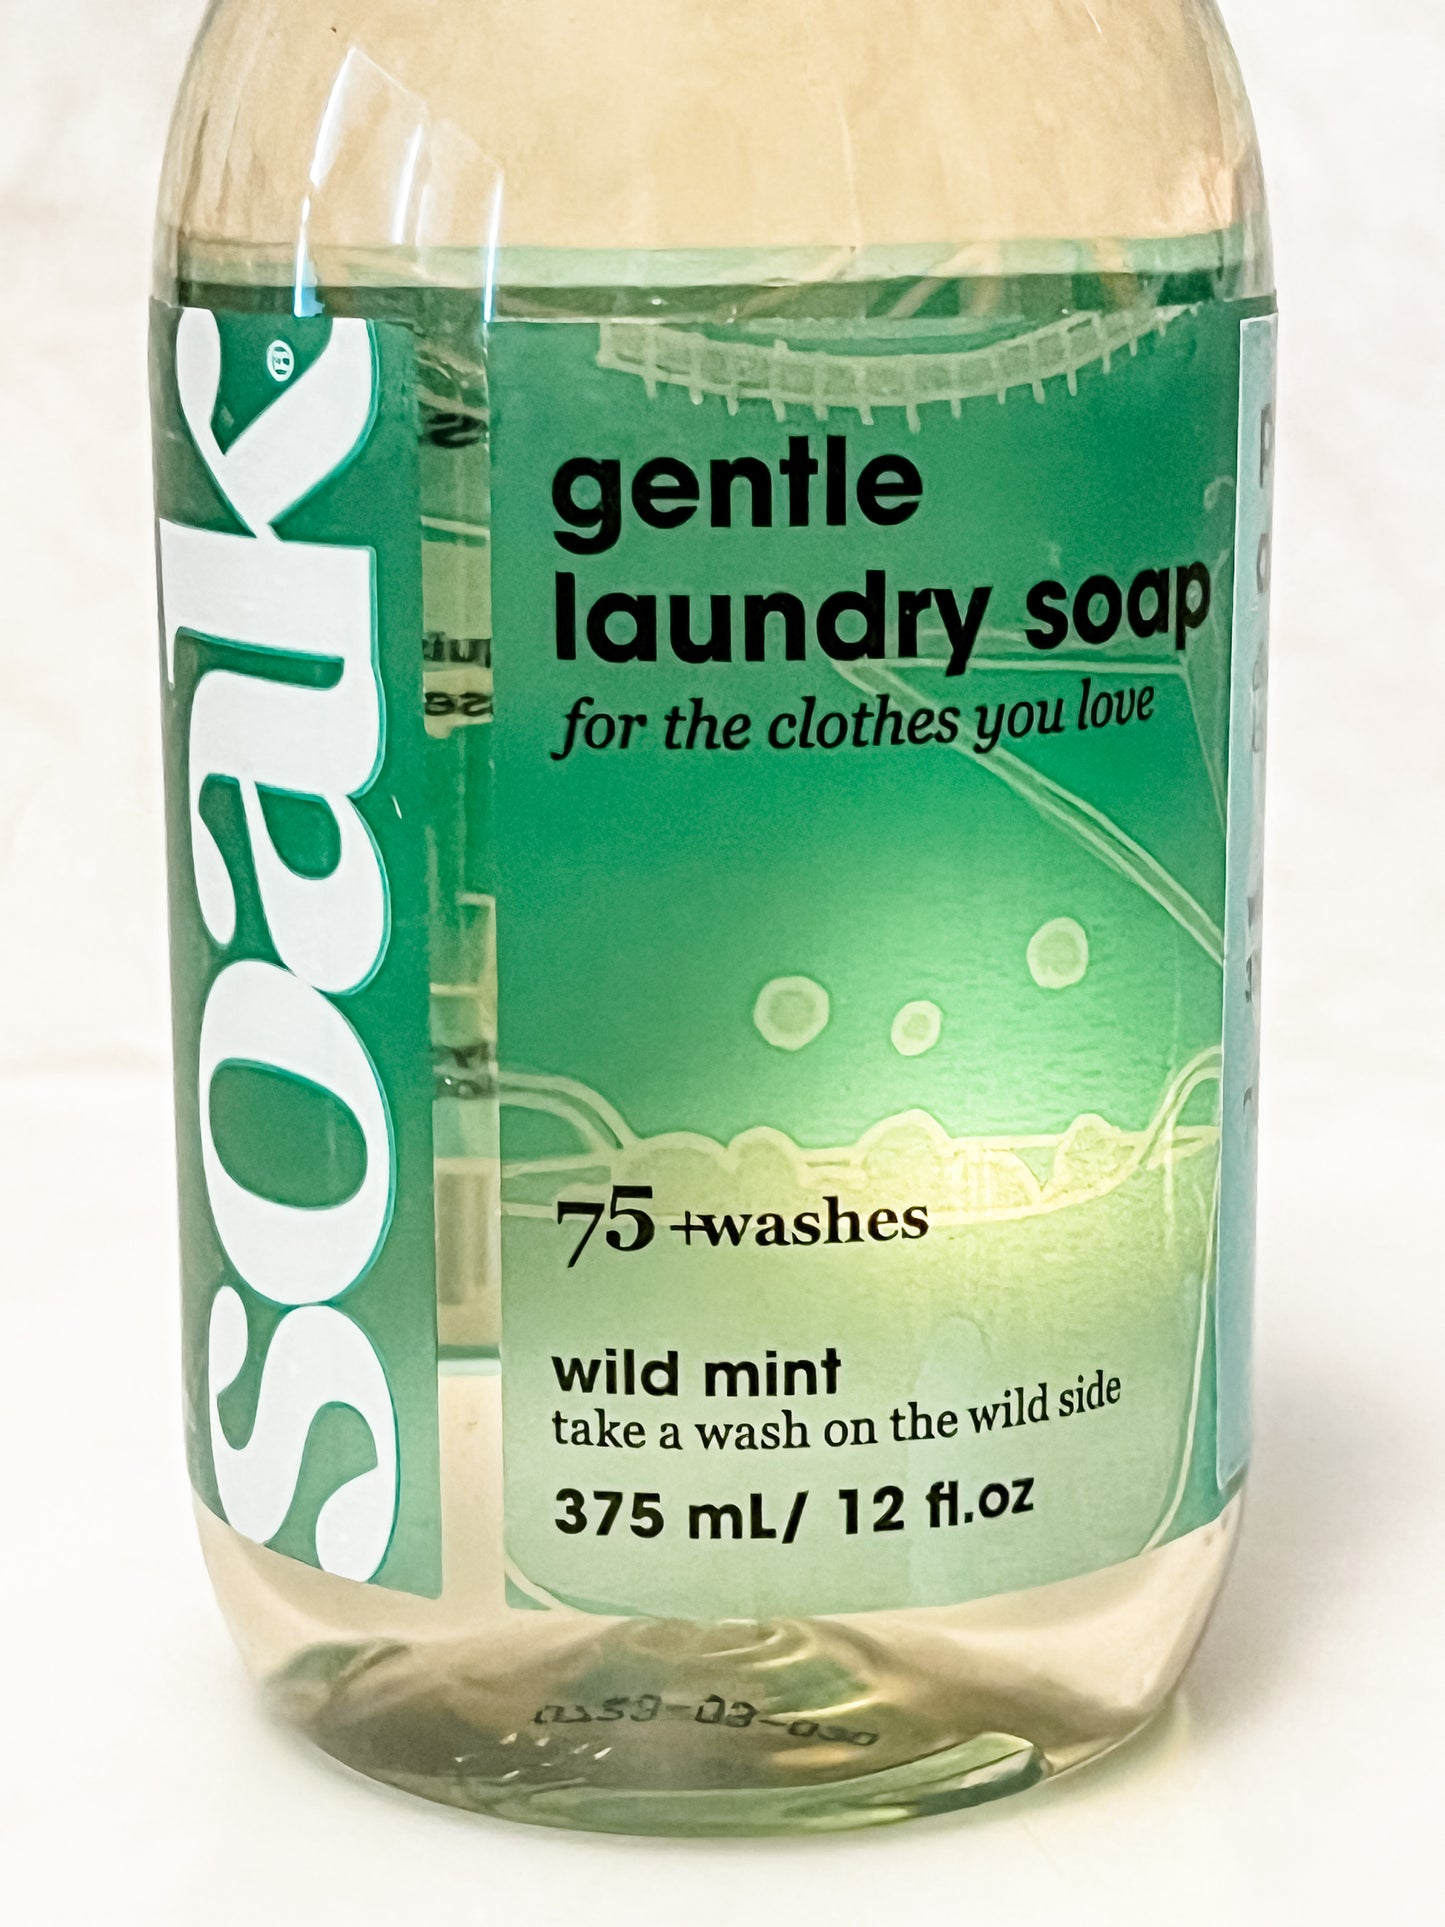 Soak wool wash 375ml (12 fl.oz) - Plant based laundry detergent - No rinse - Natural yarn wash - Recycled plastic bottles